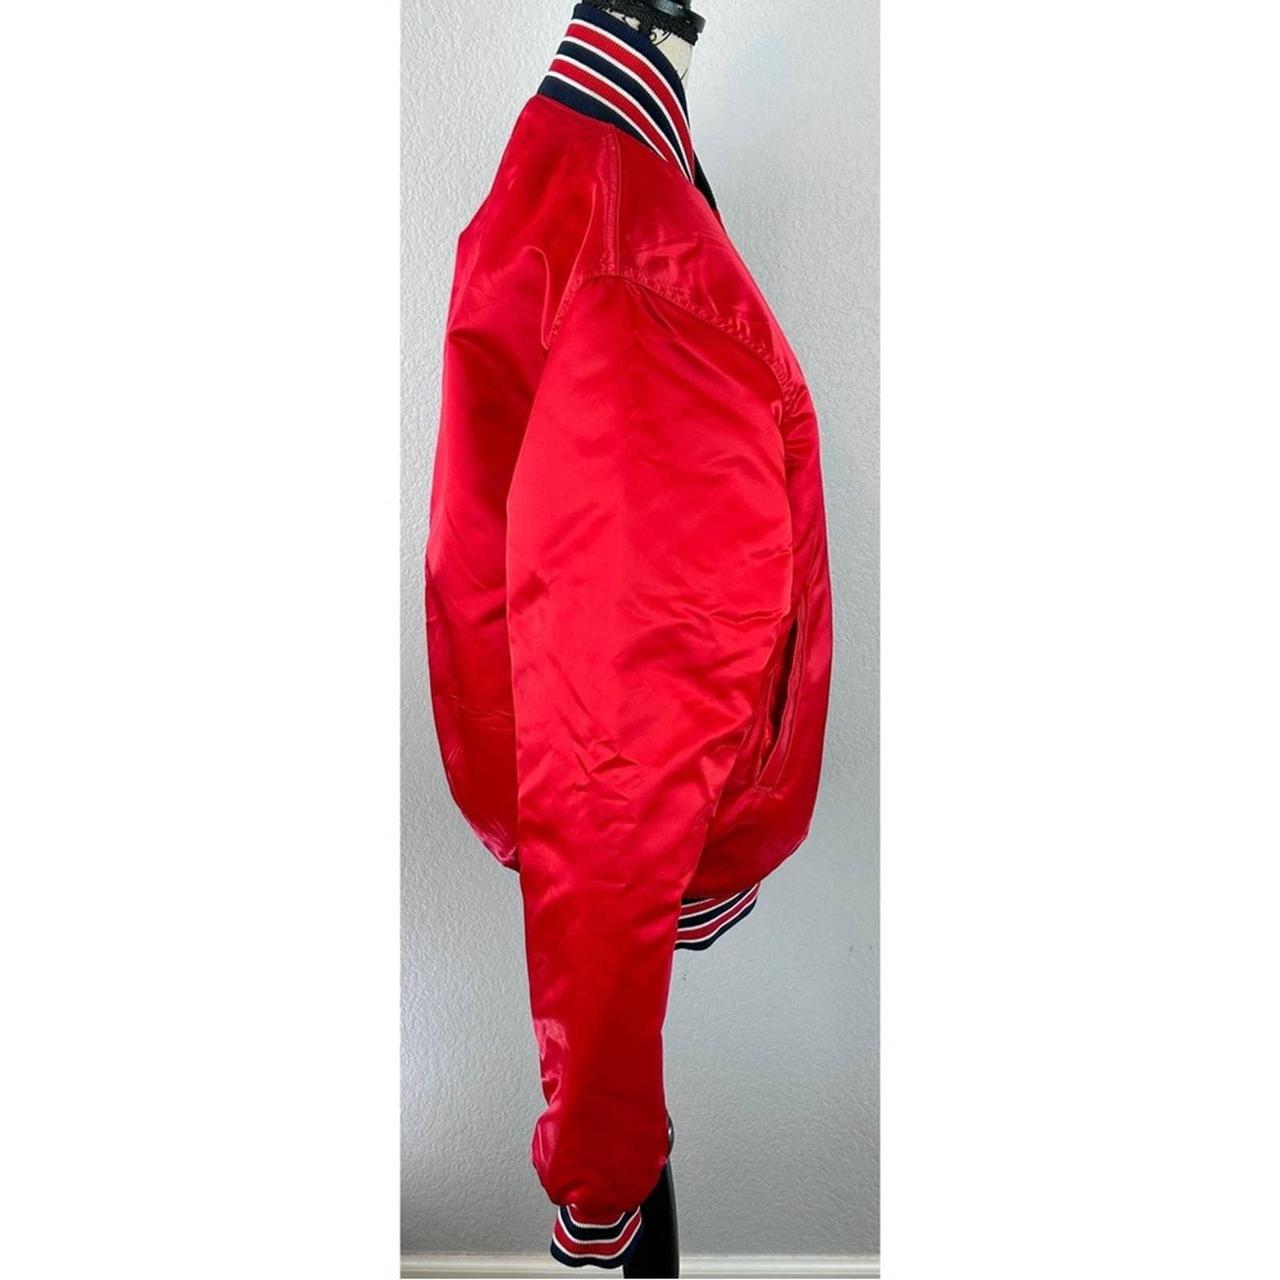 Mens gently worn vintage 90s st louis cardinals - Depop